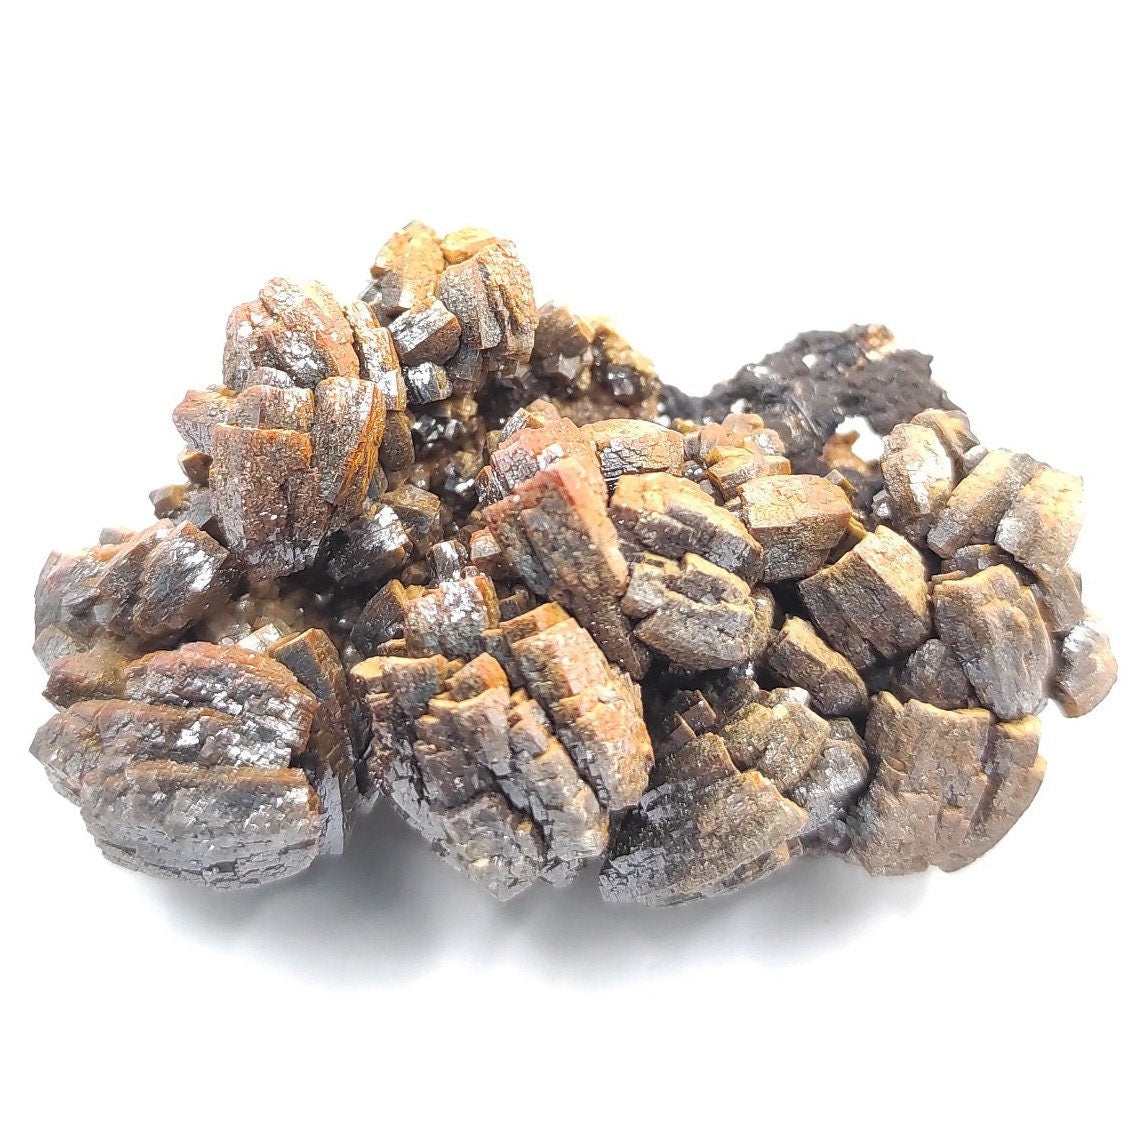 42g Vanadinite var. Endlichite - New Variety Find (April 2023) - Vanadinite Mineral Specimen from Mibladen, Morocco - Coud'a Workings